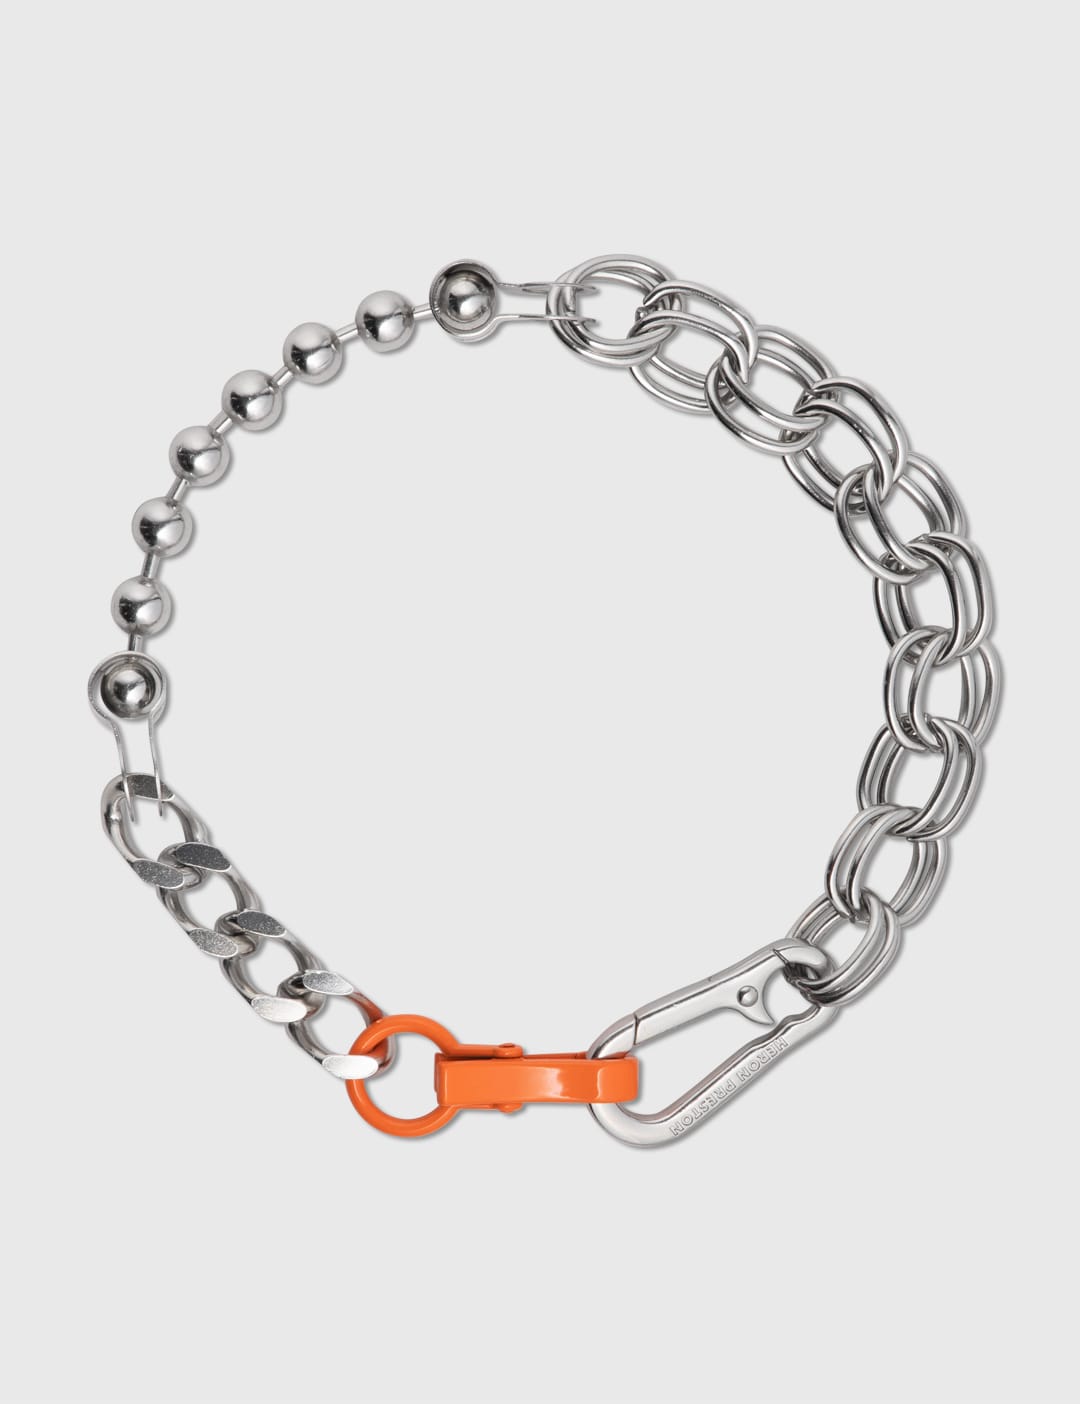 Alexander McQueen - Identity Chain Bracelet | HBX - Globally 